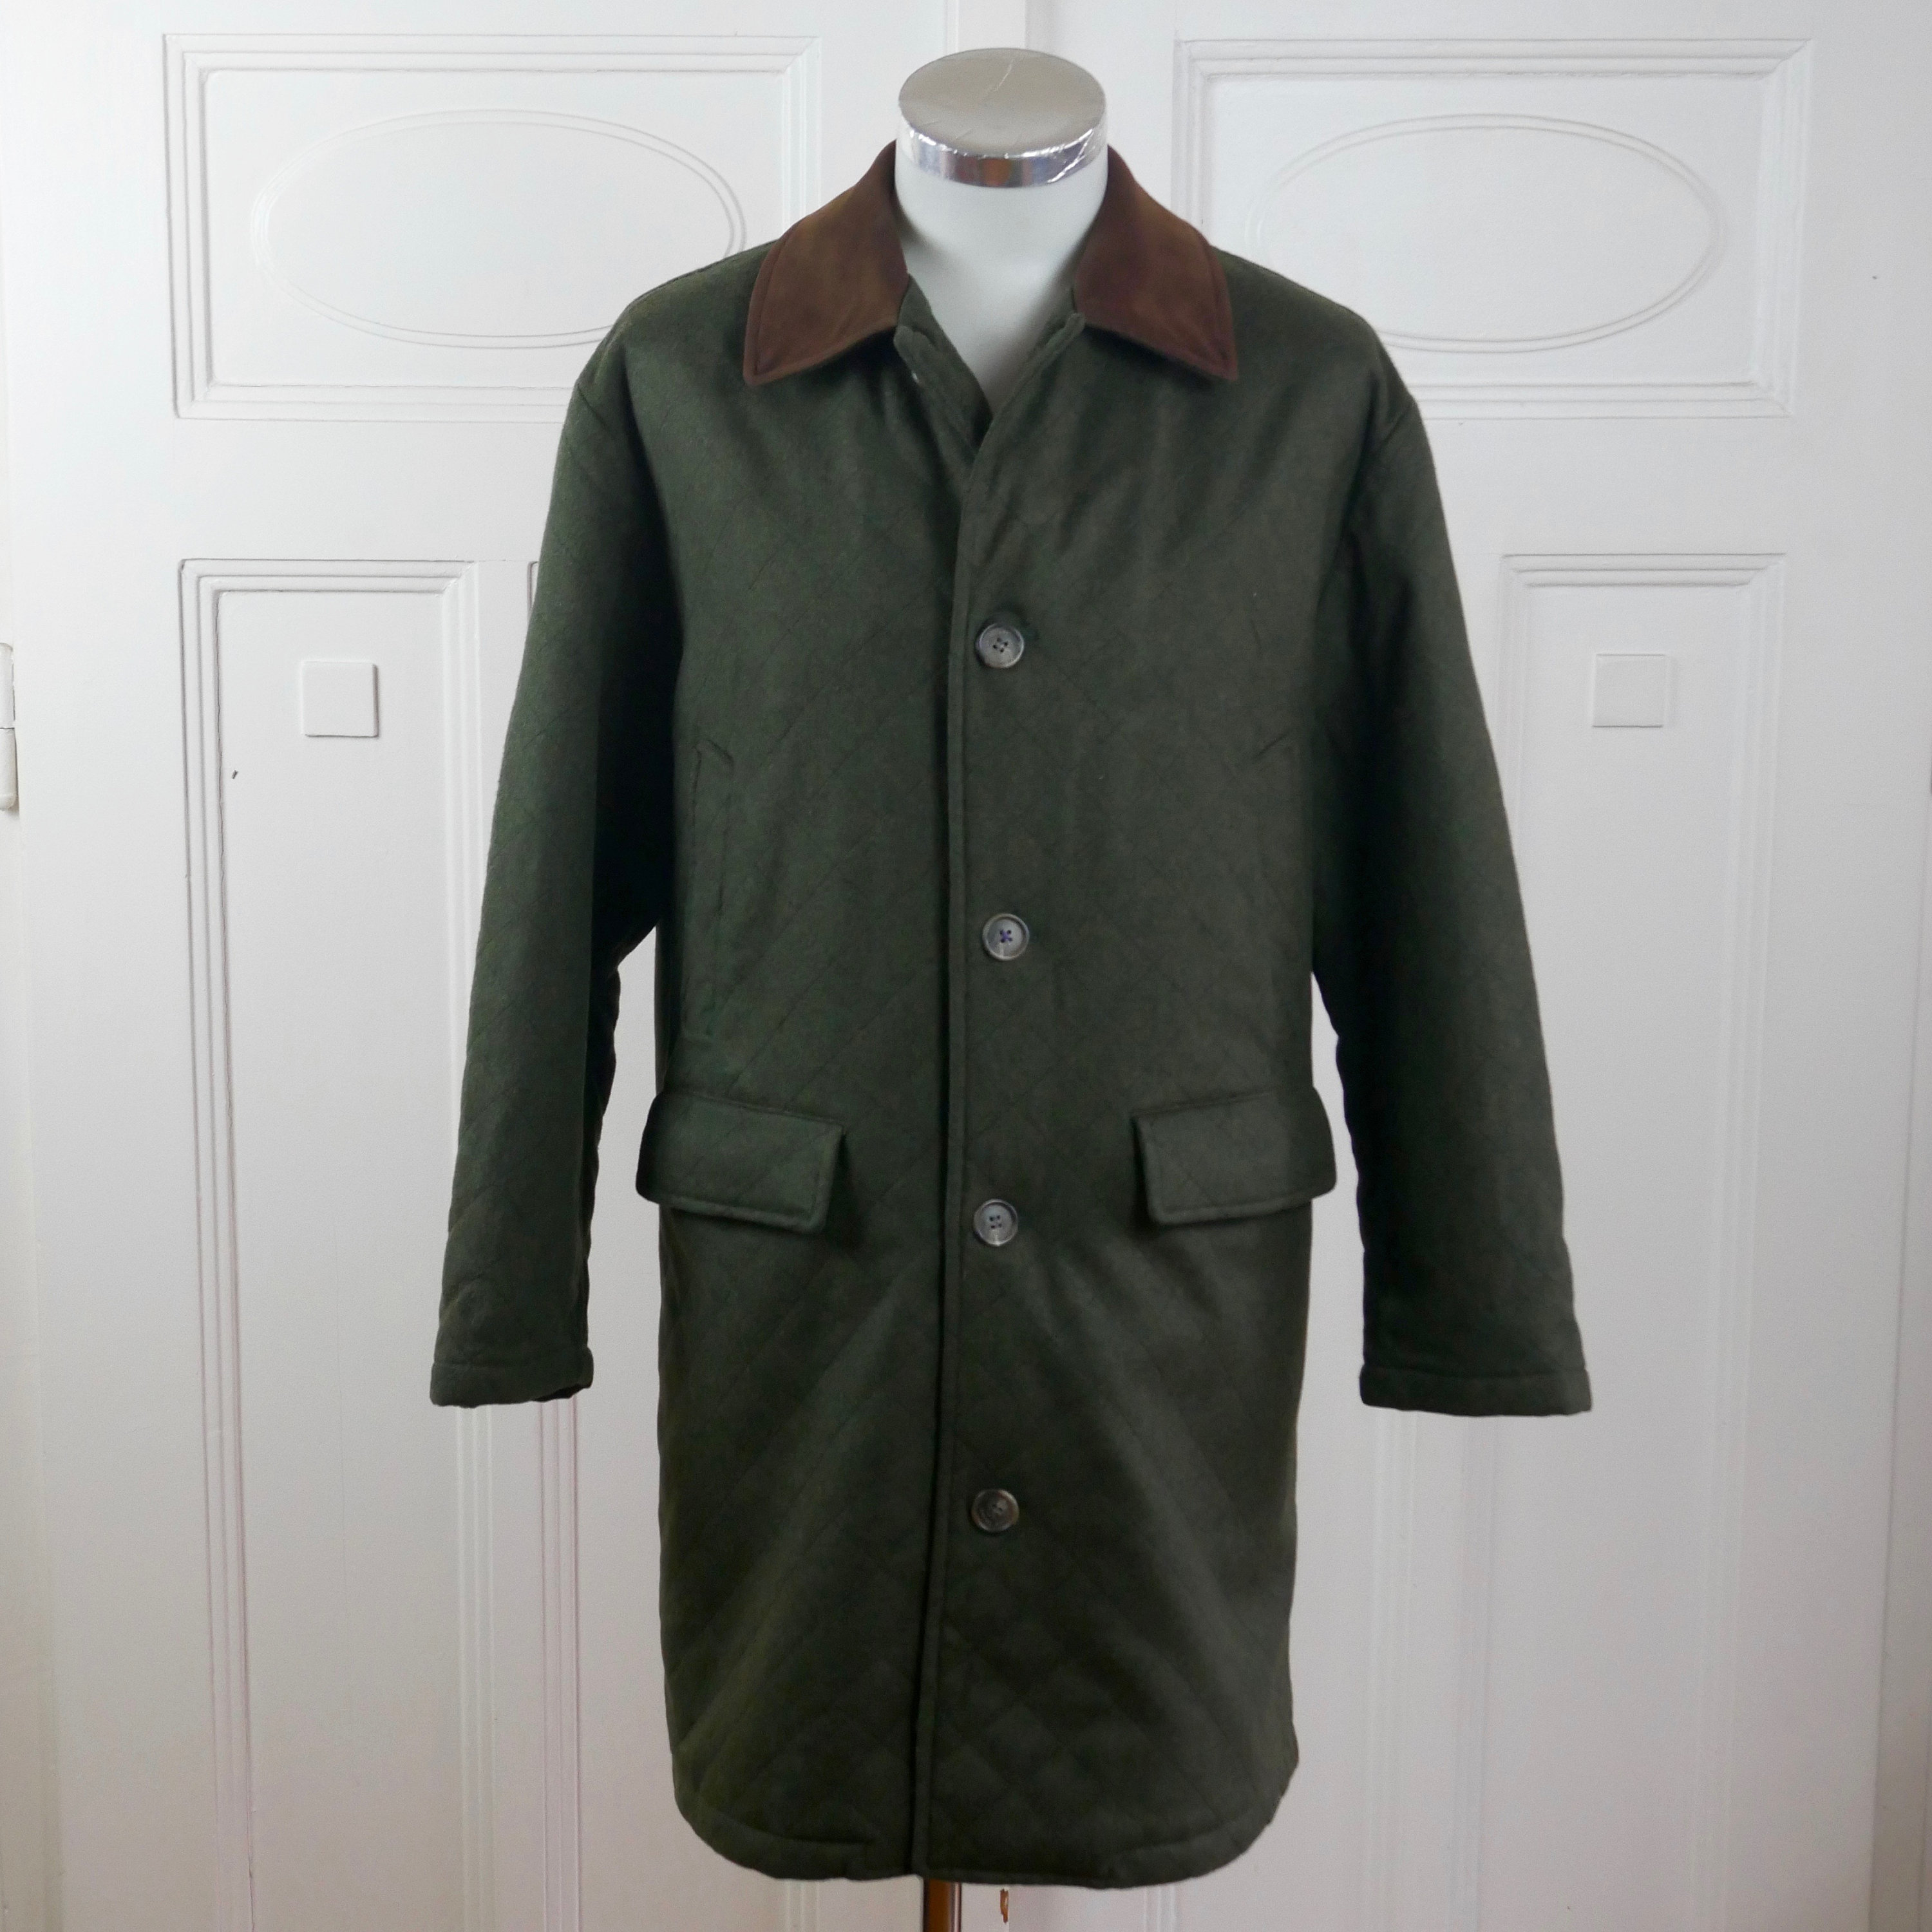 Green Wool Coat 1990s Italian Vintage Overcoat: Size 44 Short - Etsy